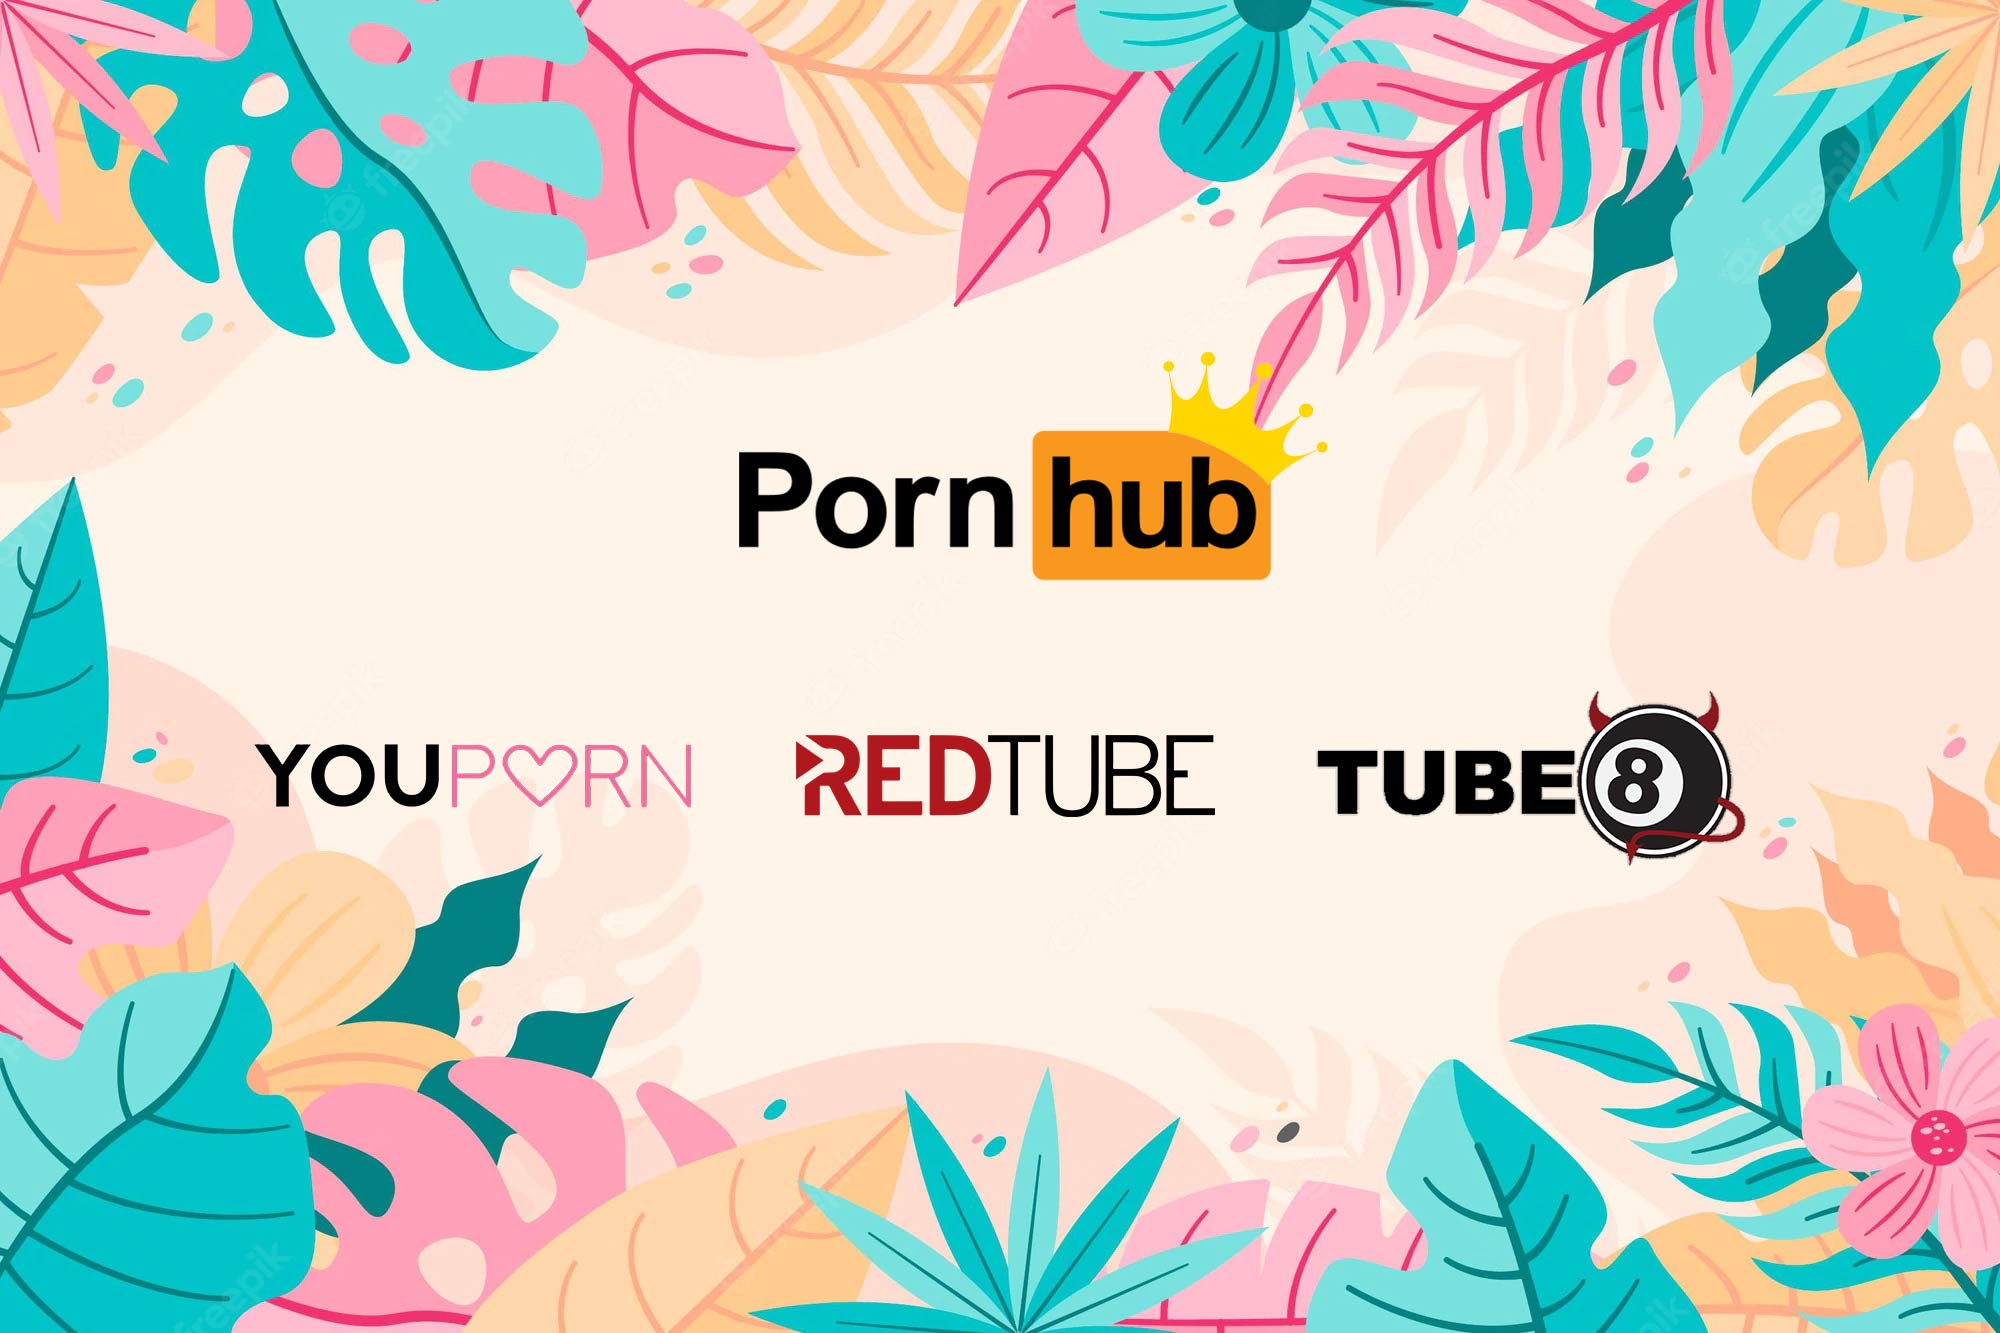 Pornhub’s Partners